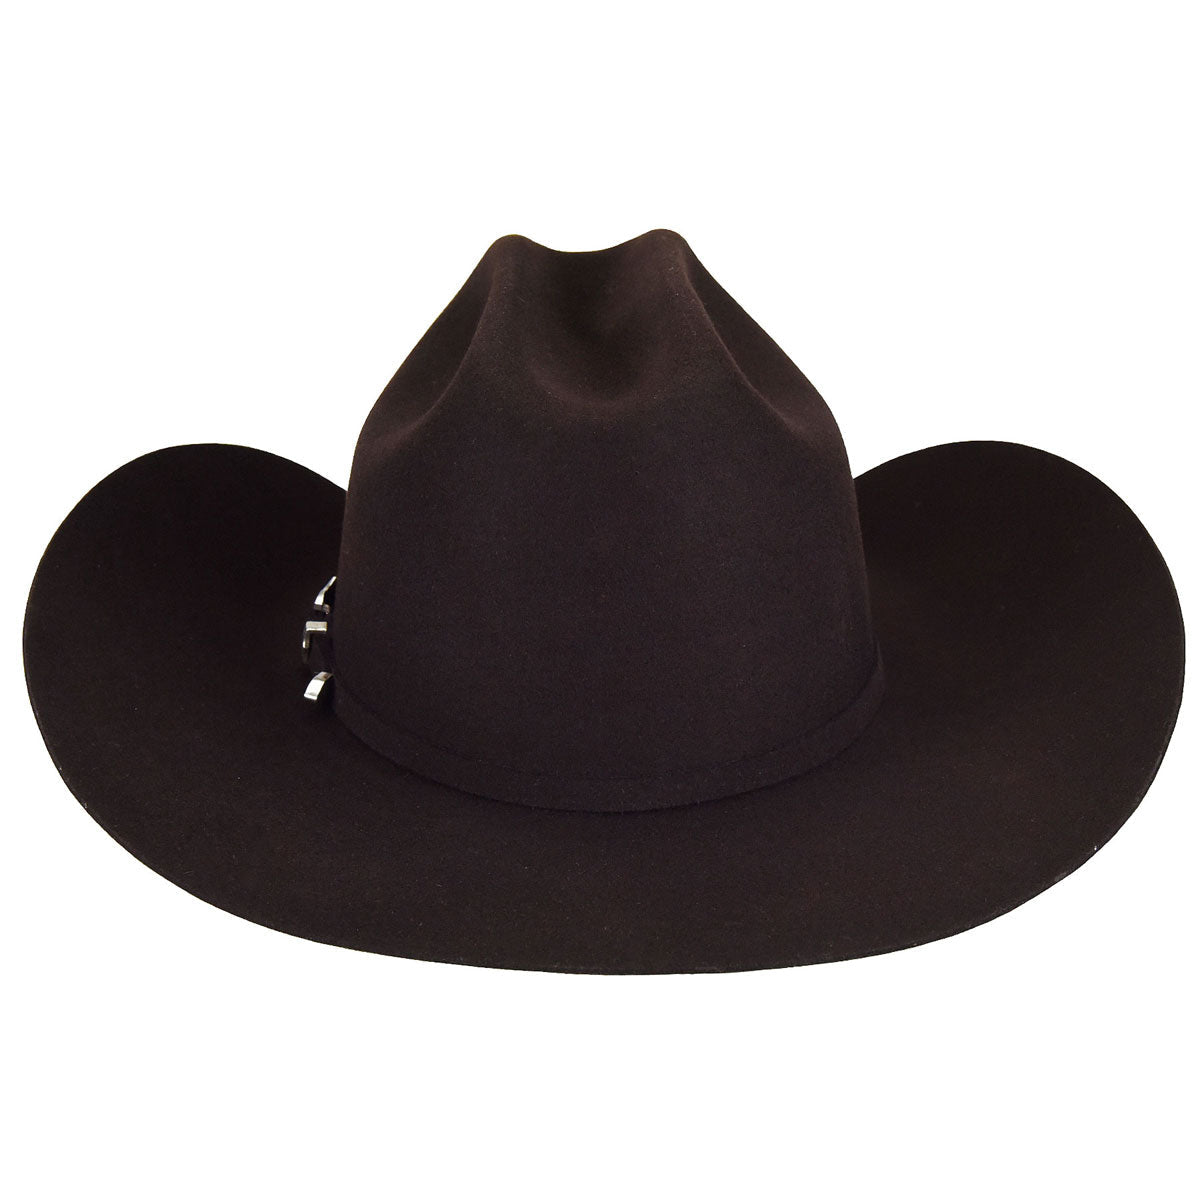 Bailey Pageant II 2X Cowboy Hat